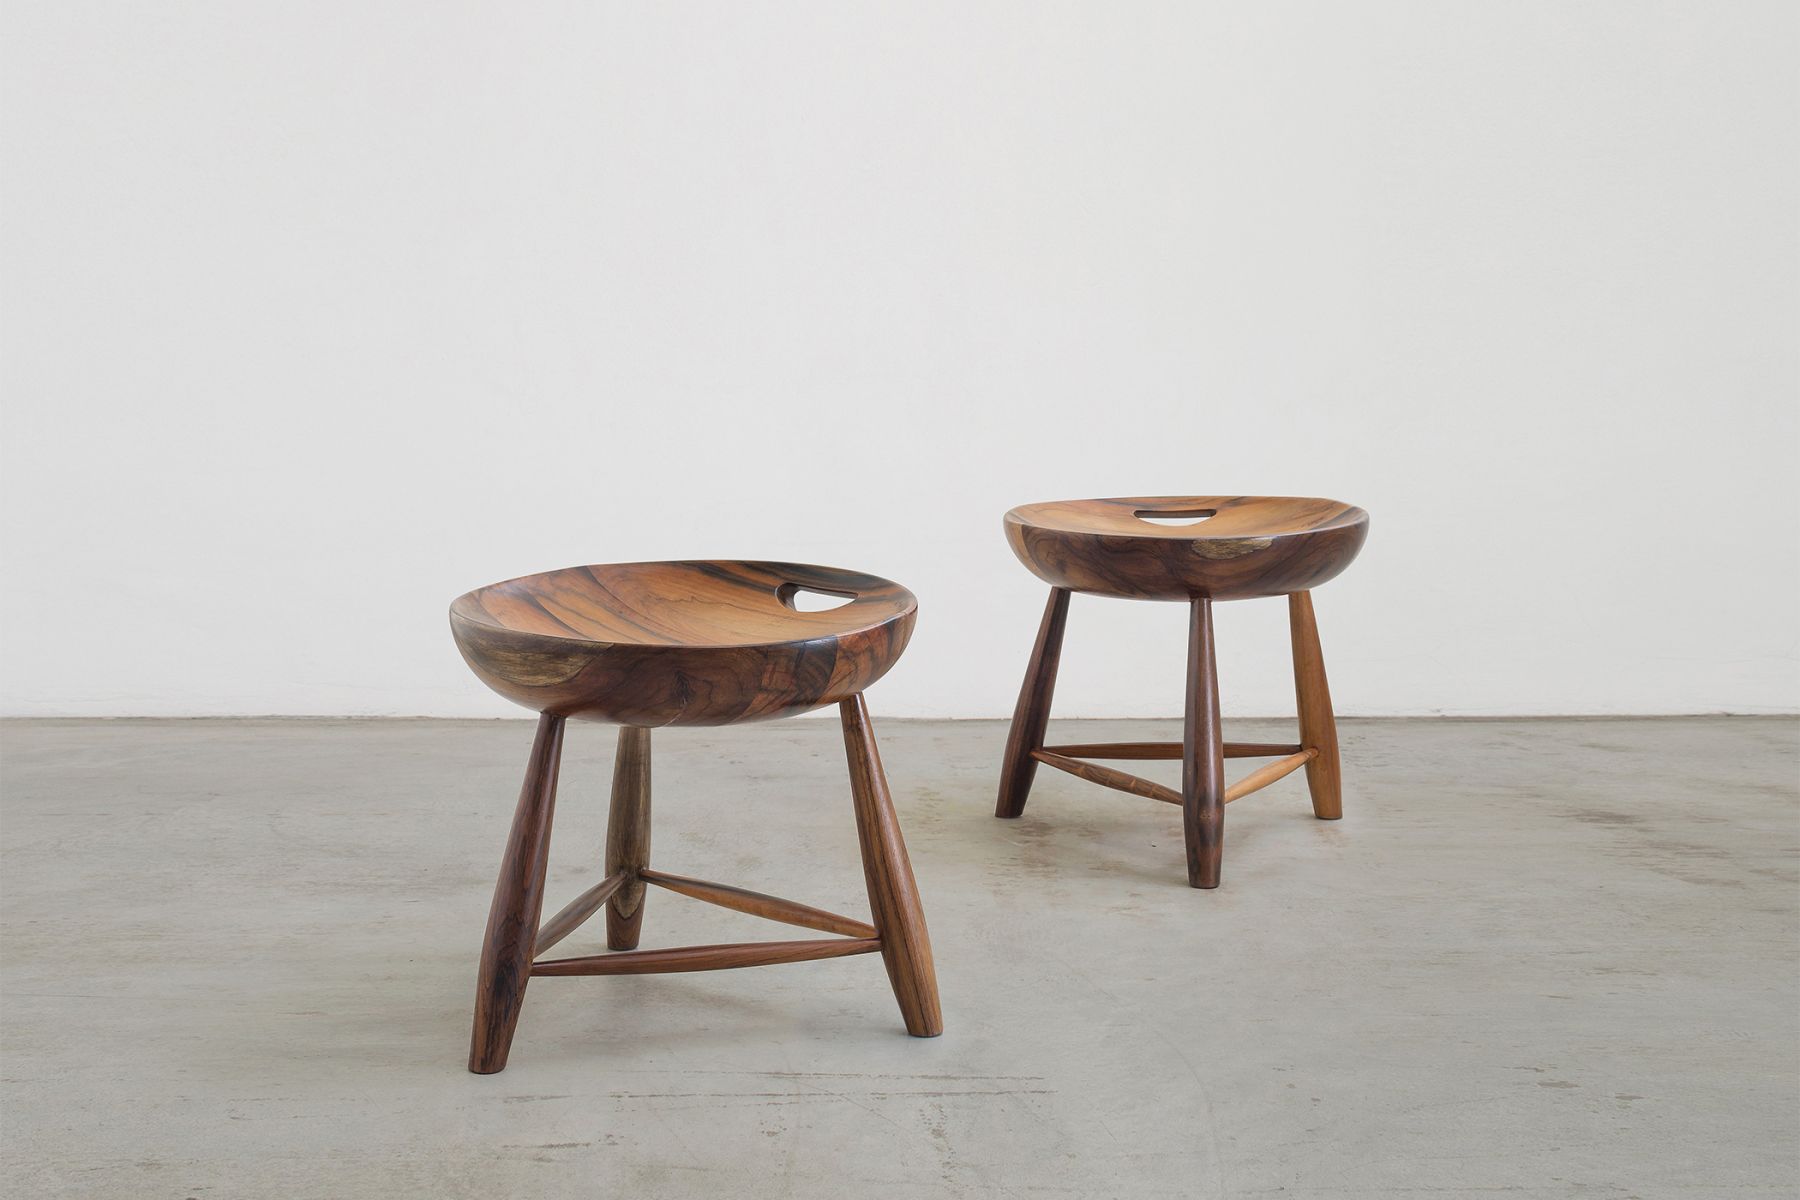  Pair of Mocho stools Sergio Rodrigues pic-1